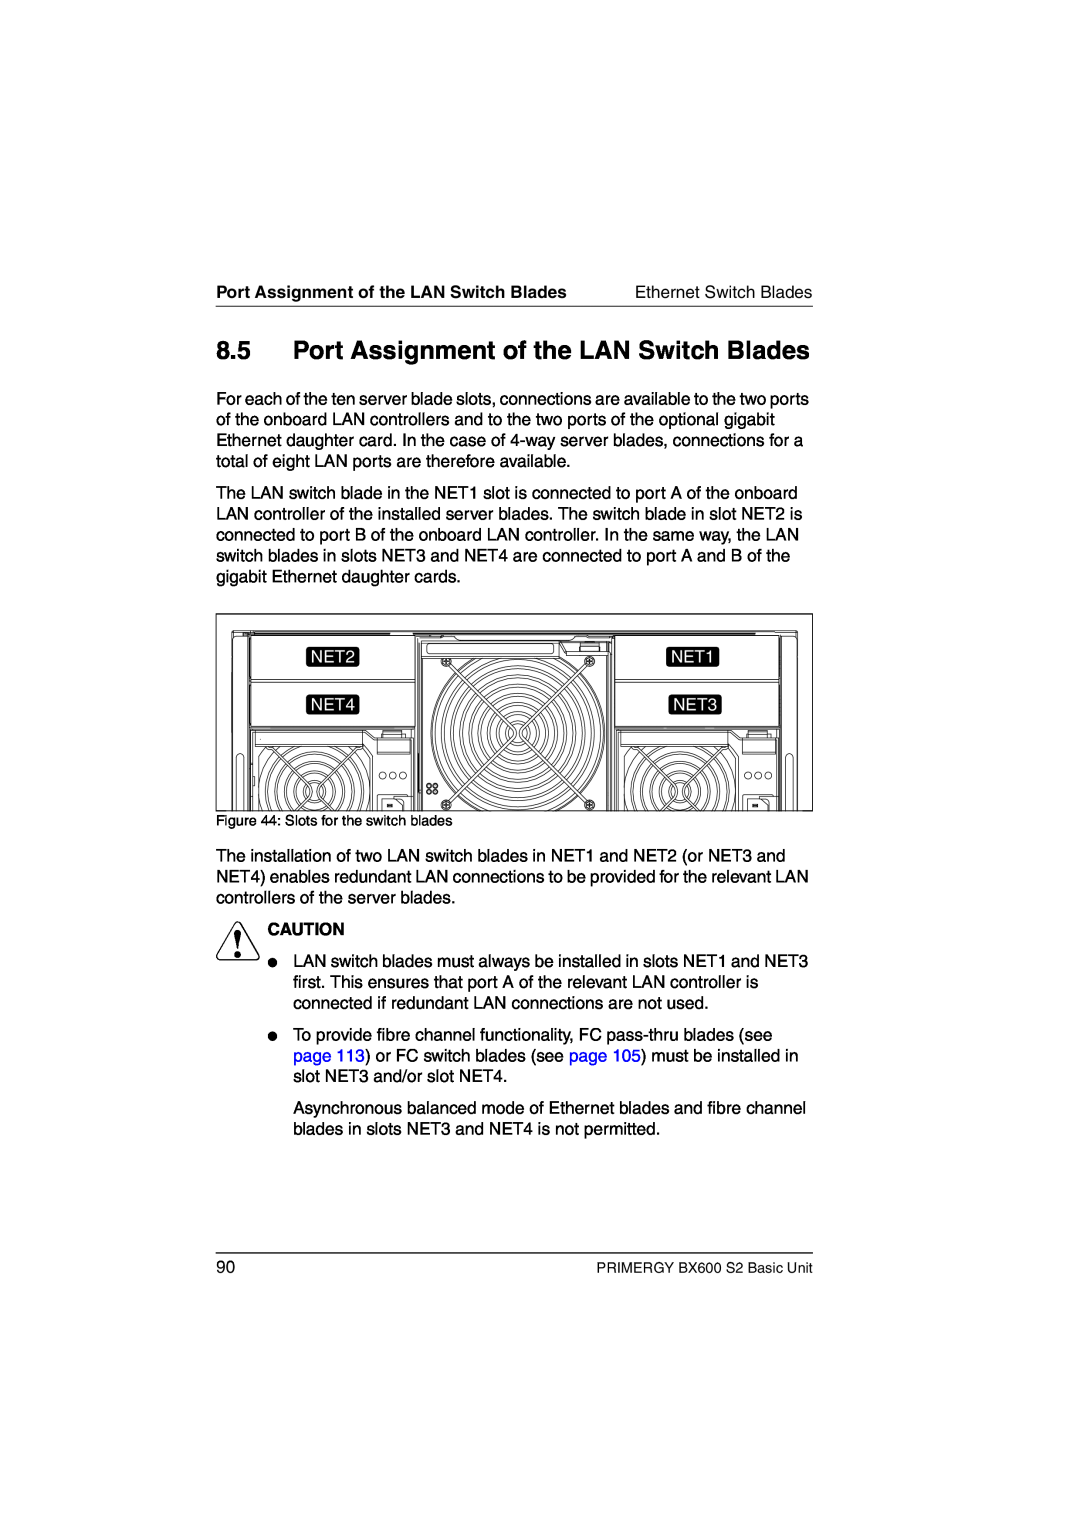 Fujitsu BX600 S2 manual Port Assignment of the LAN Switch Blades, NET2, NET1, NET4, NET3, V Caution 